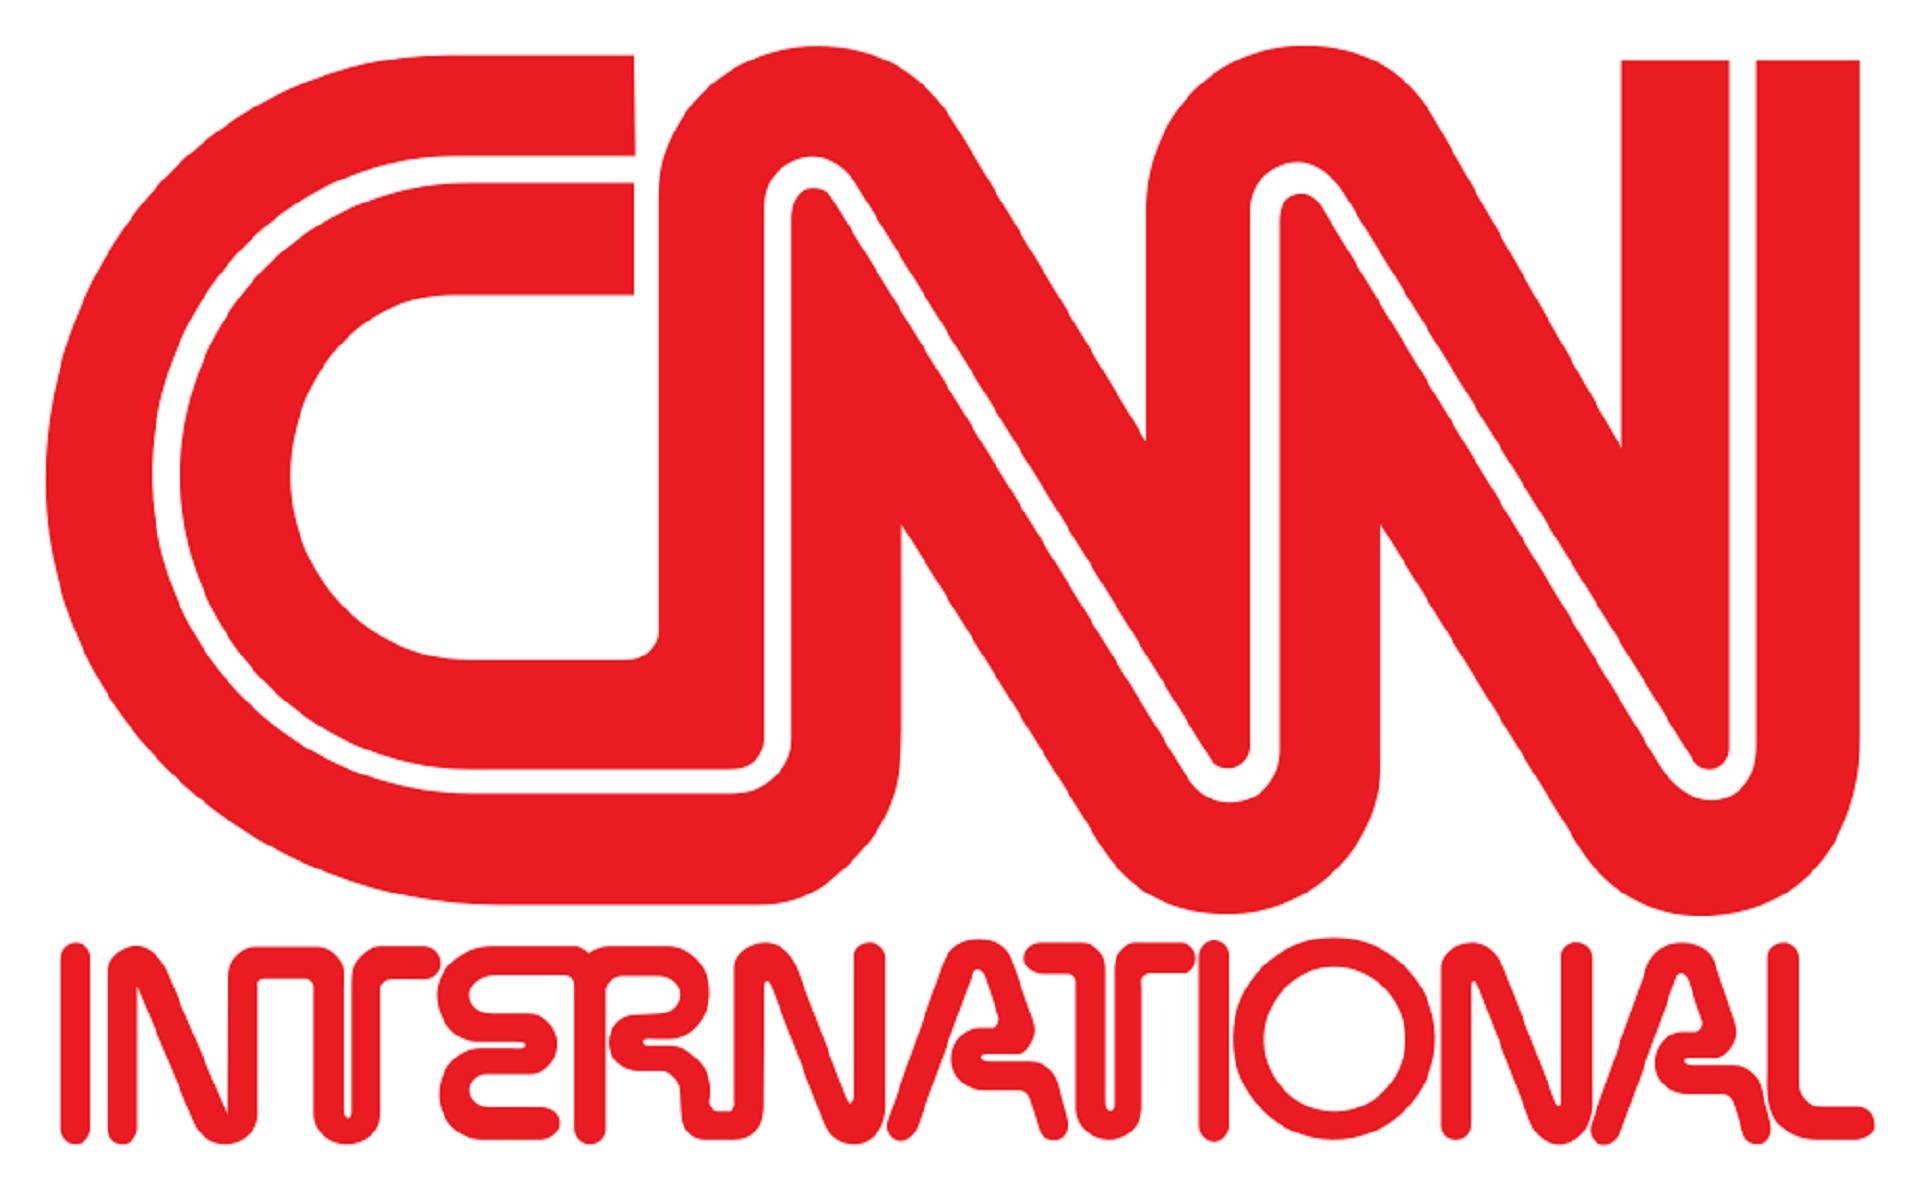 Cnn International Logo Background